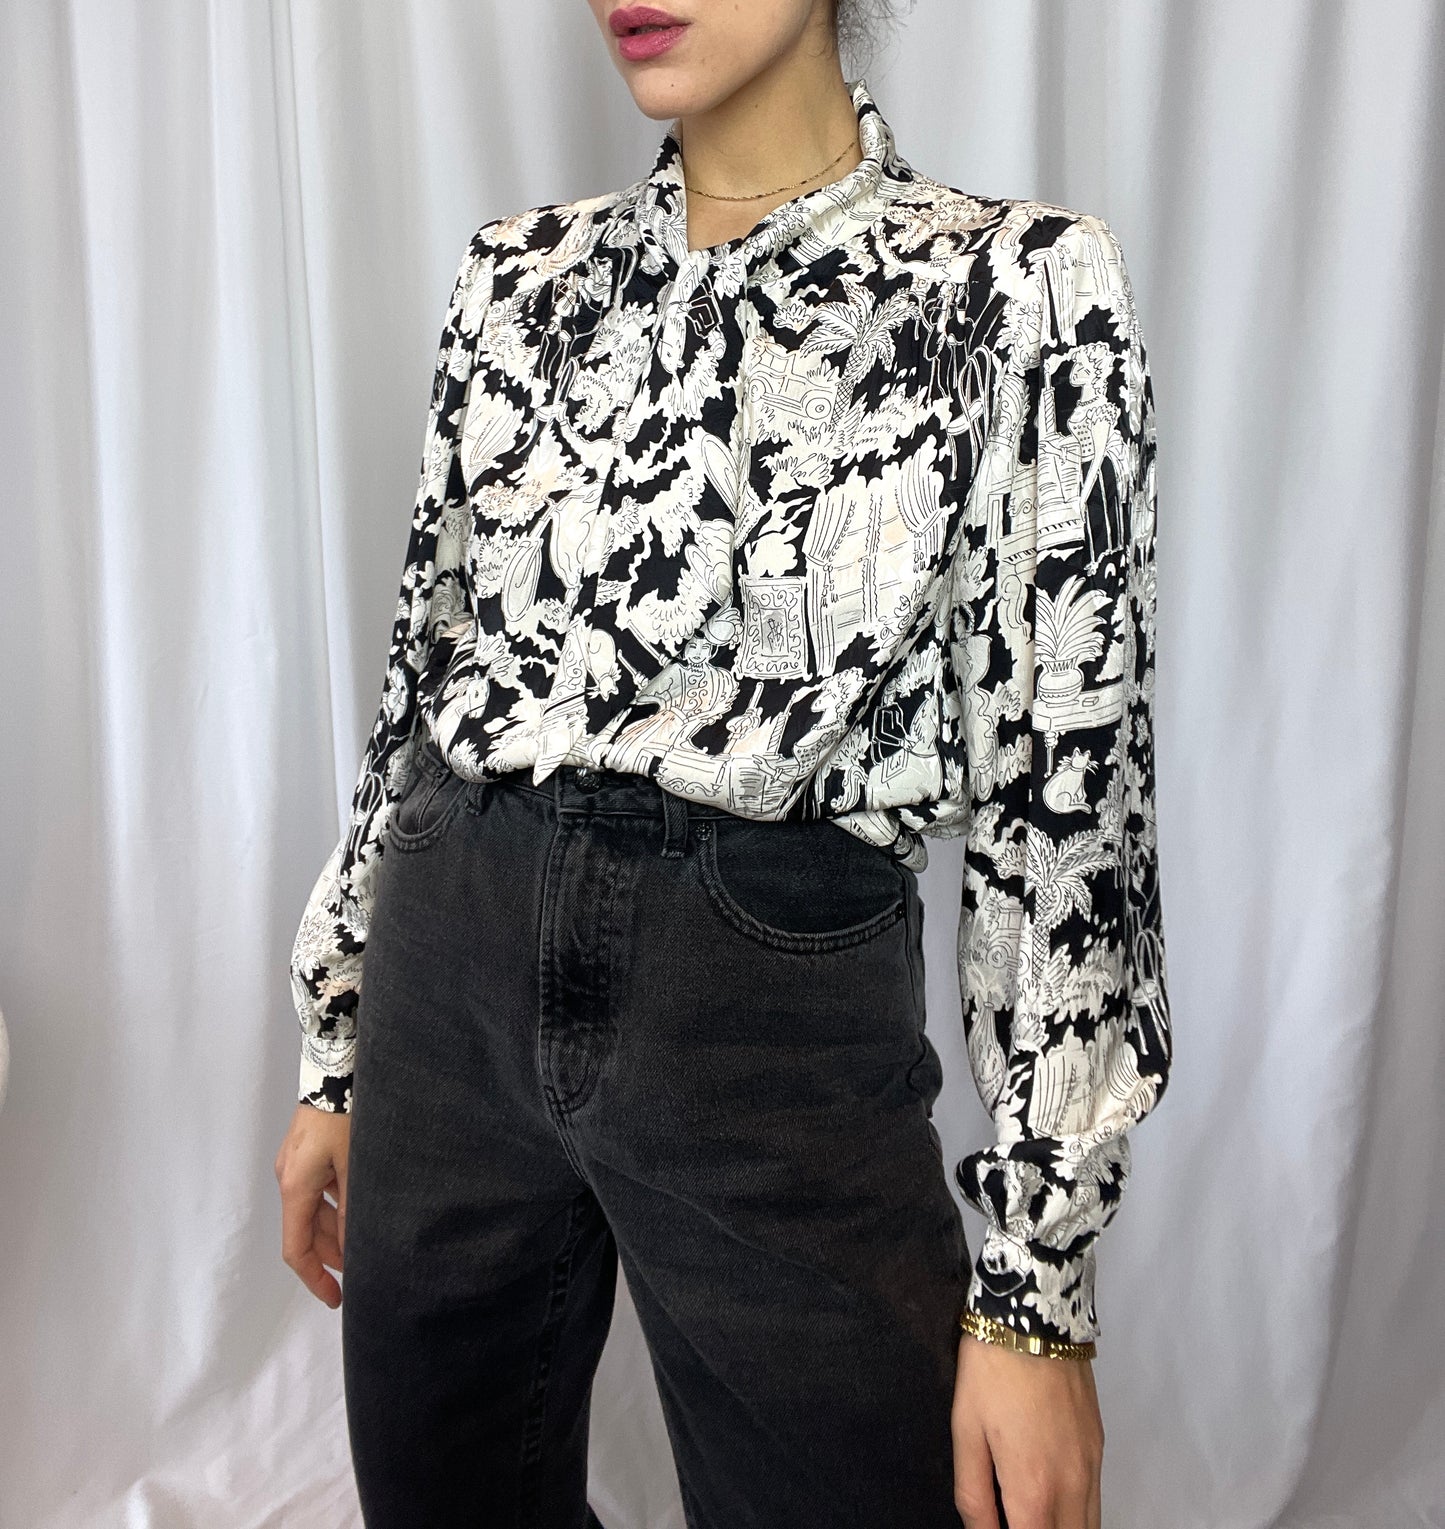 The tailoring black & white blouse